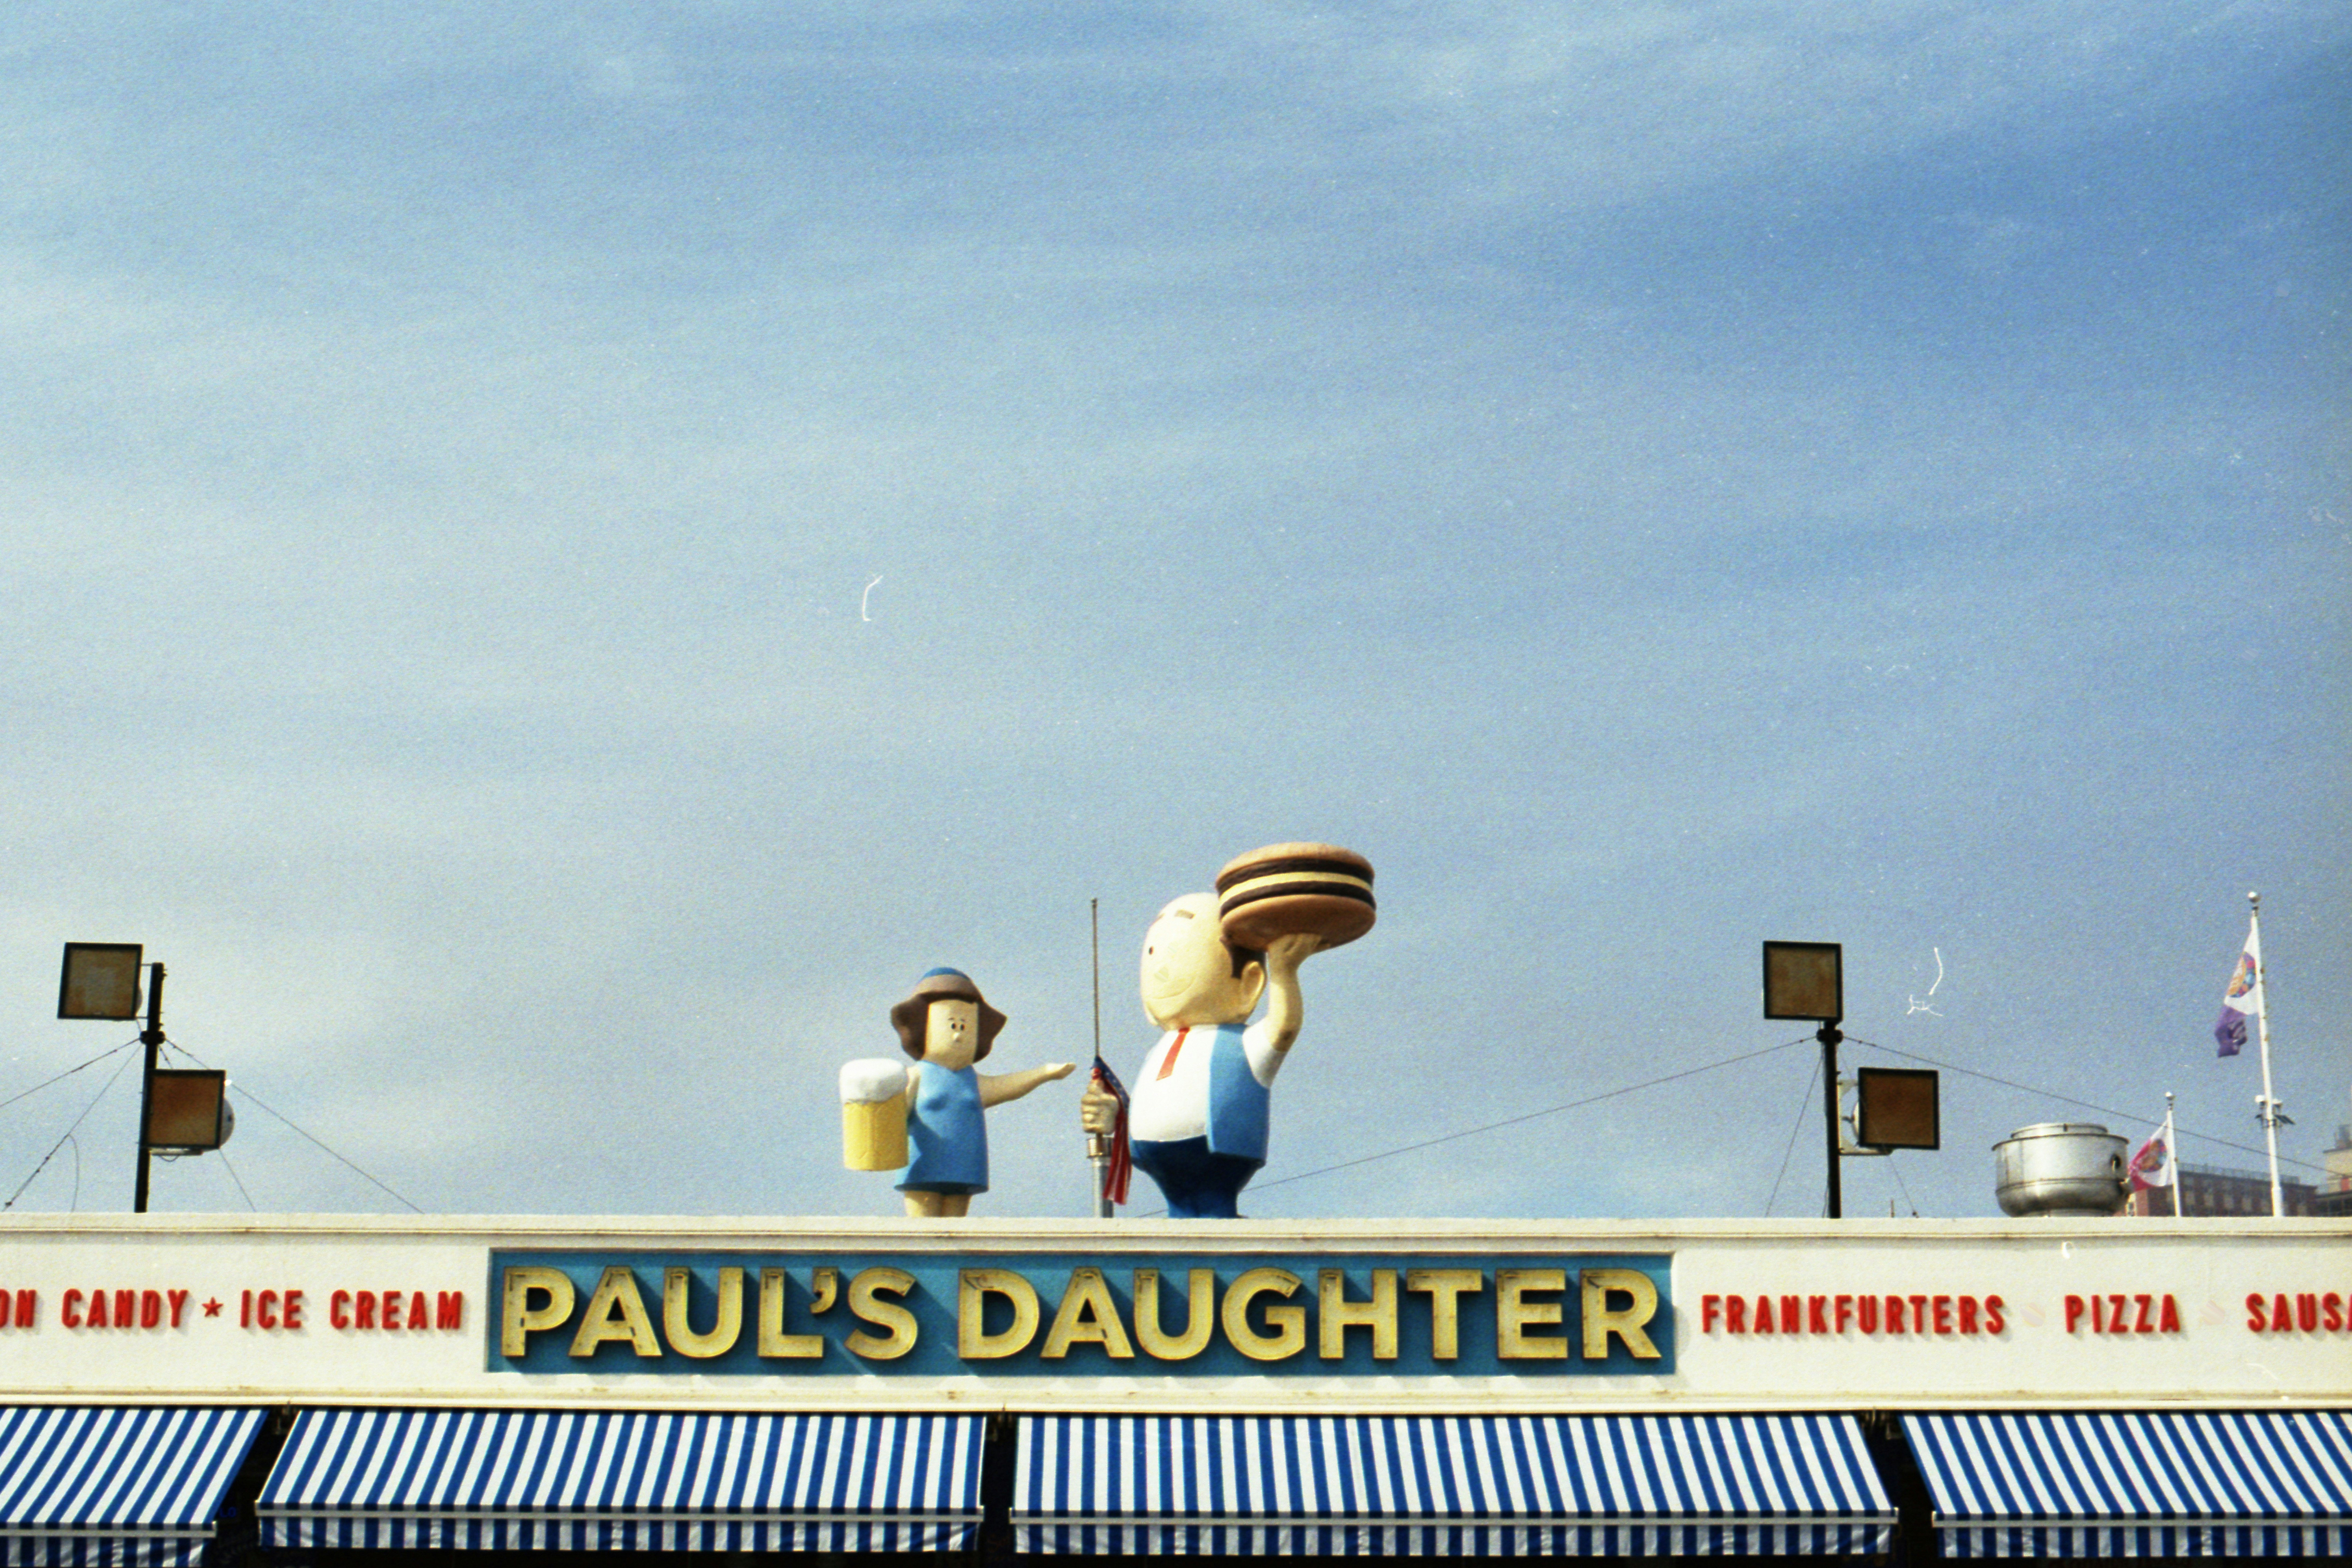 Paul's daughter signage under blue sky